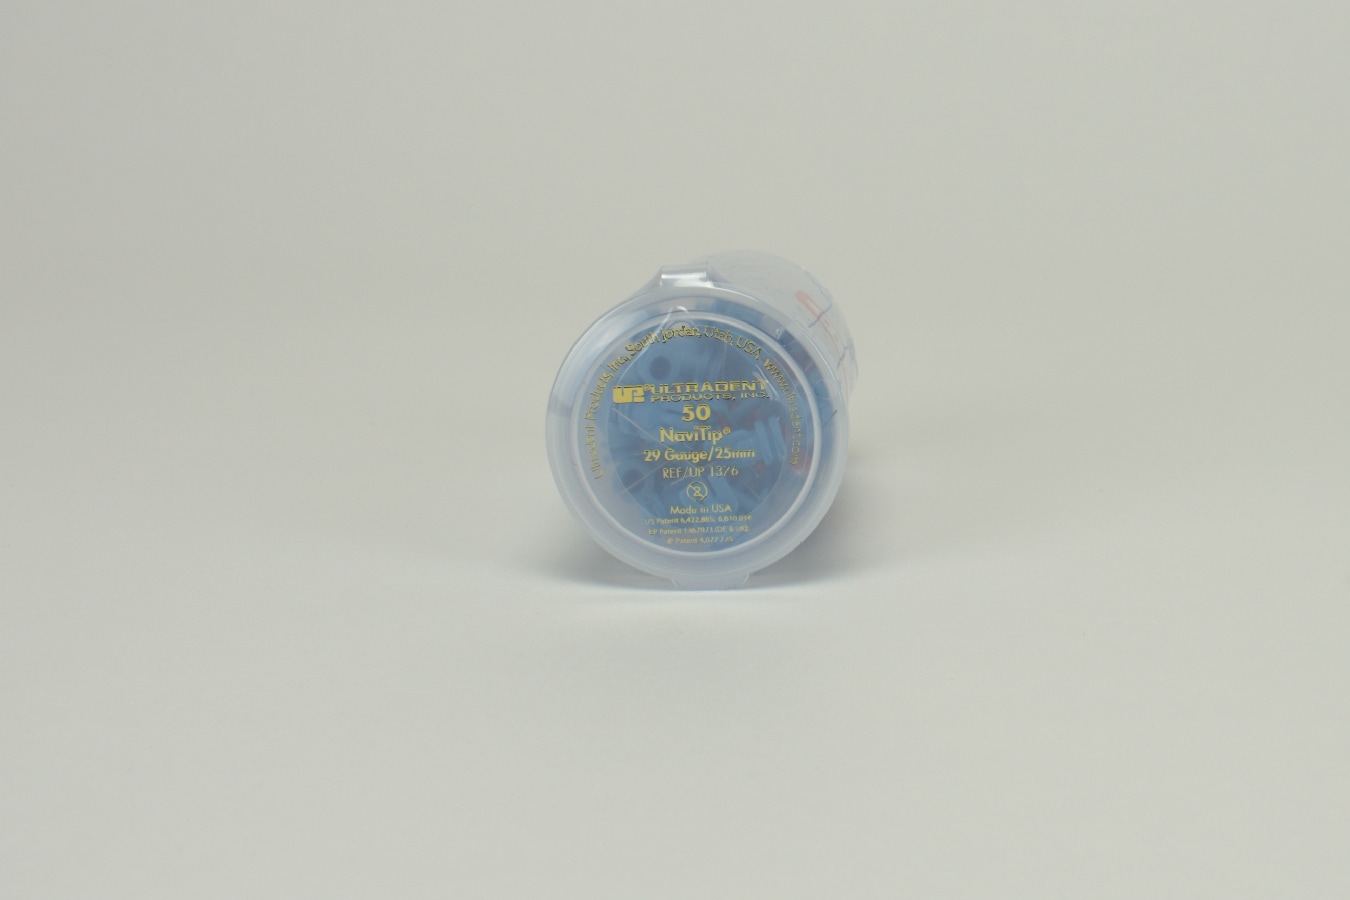 NaviTip 29 ga 25mm ljusblå 50st